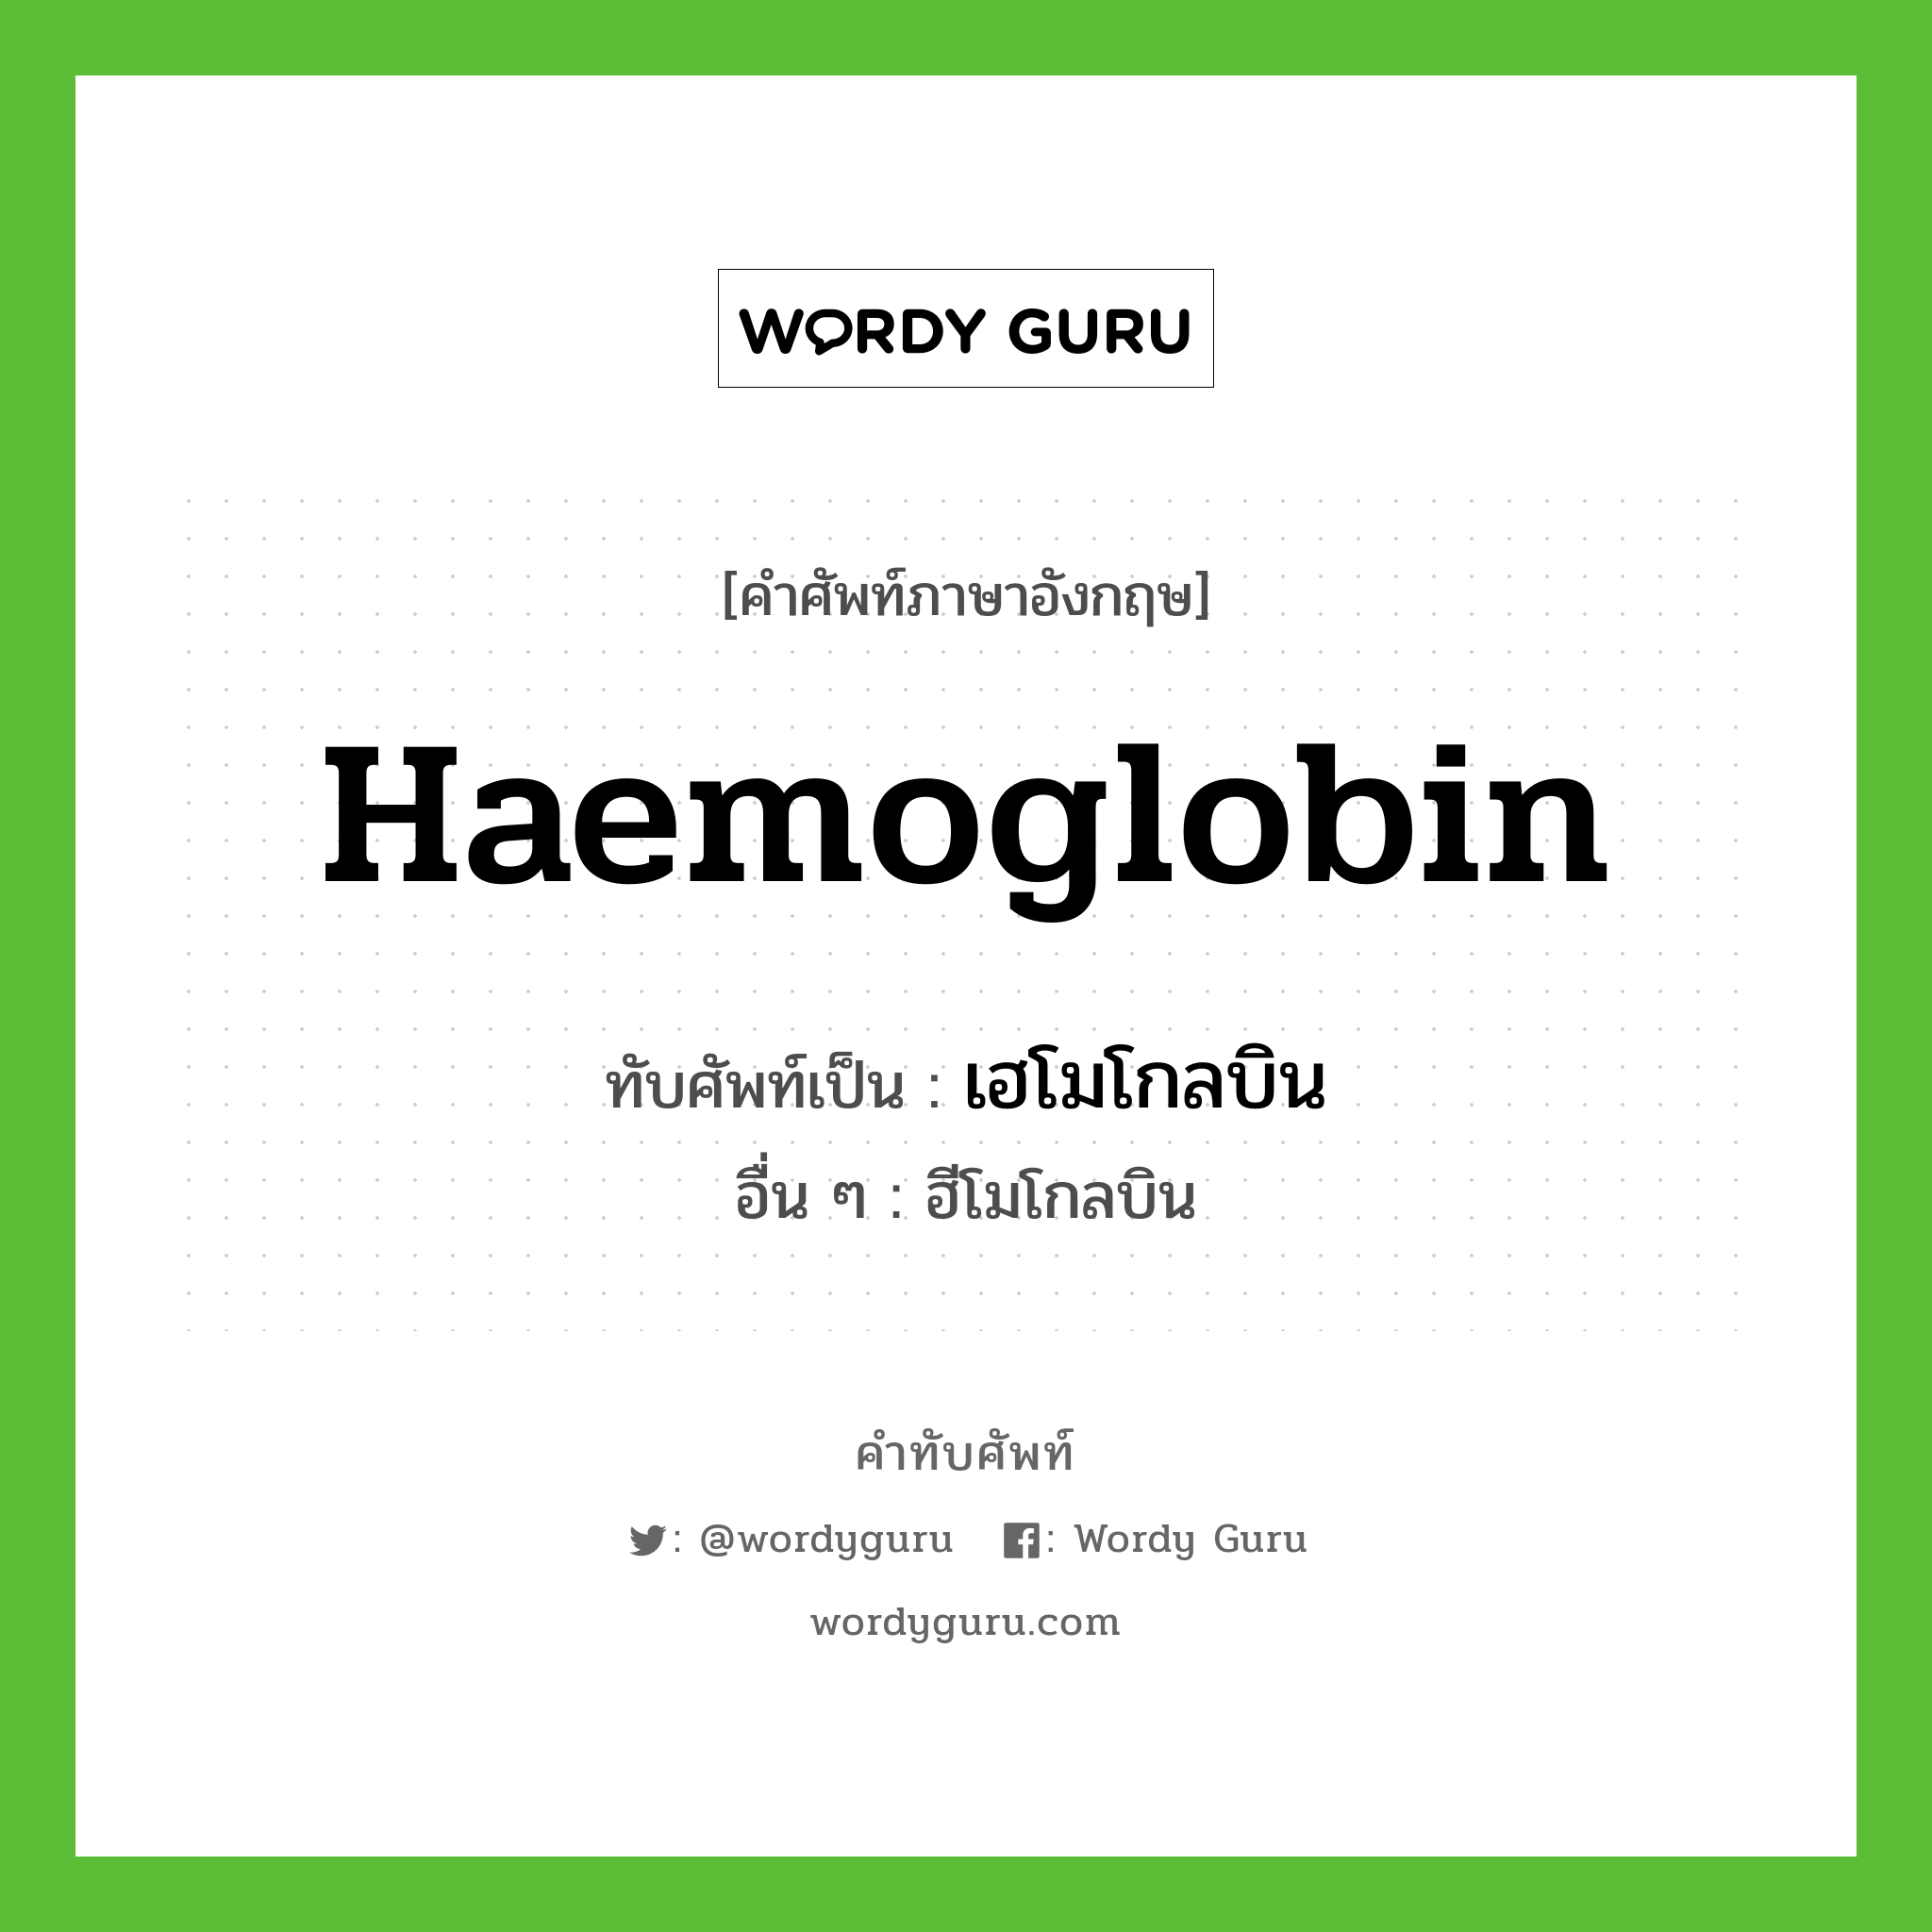 haemoglobin เขียนเป็นคำไทยว่าอะไร?, คำศัพท์ภาษาอังกฤษ haemoglobin ทับศัพท์เป็น เฮโมโกลบิน อื่น ๆ ฮีโมโกลบิน